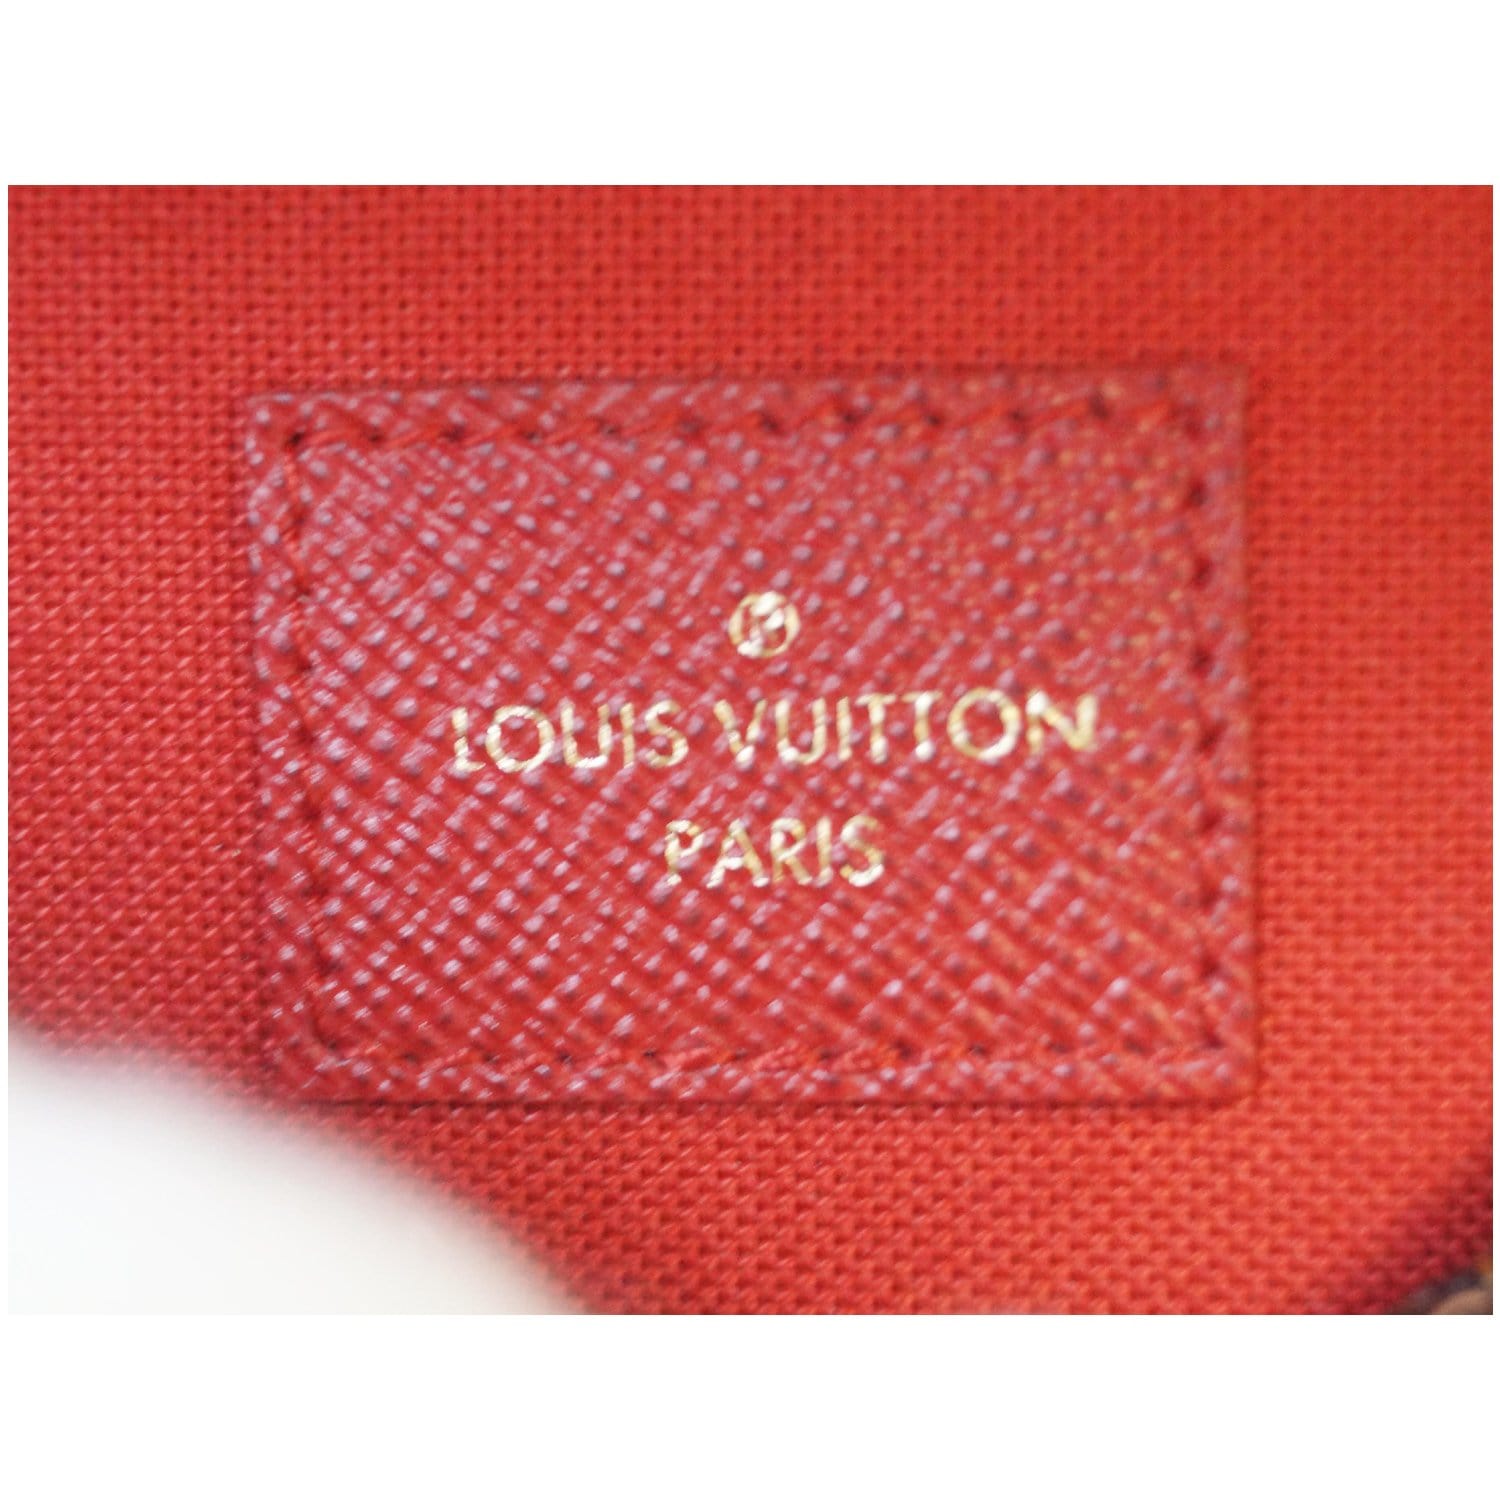 Louis Vuitton Pochette Felicie Damier Ebene Canvas Wallet